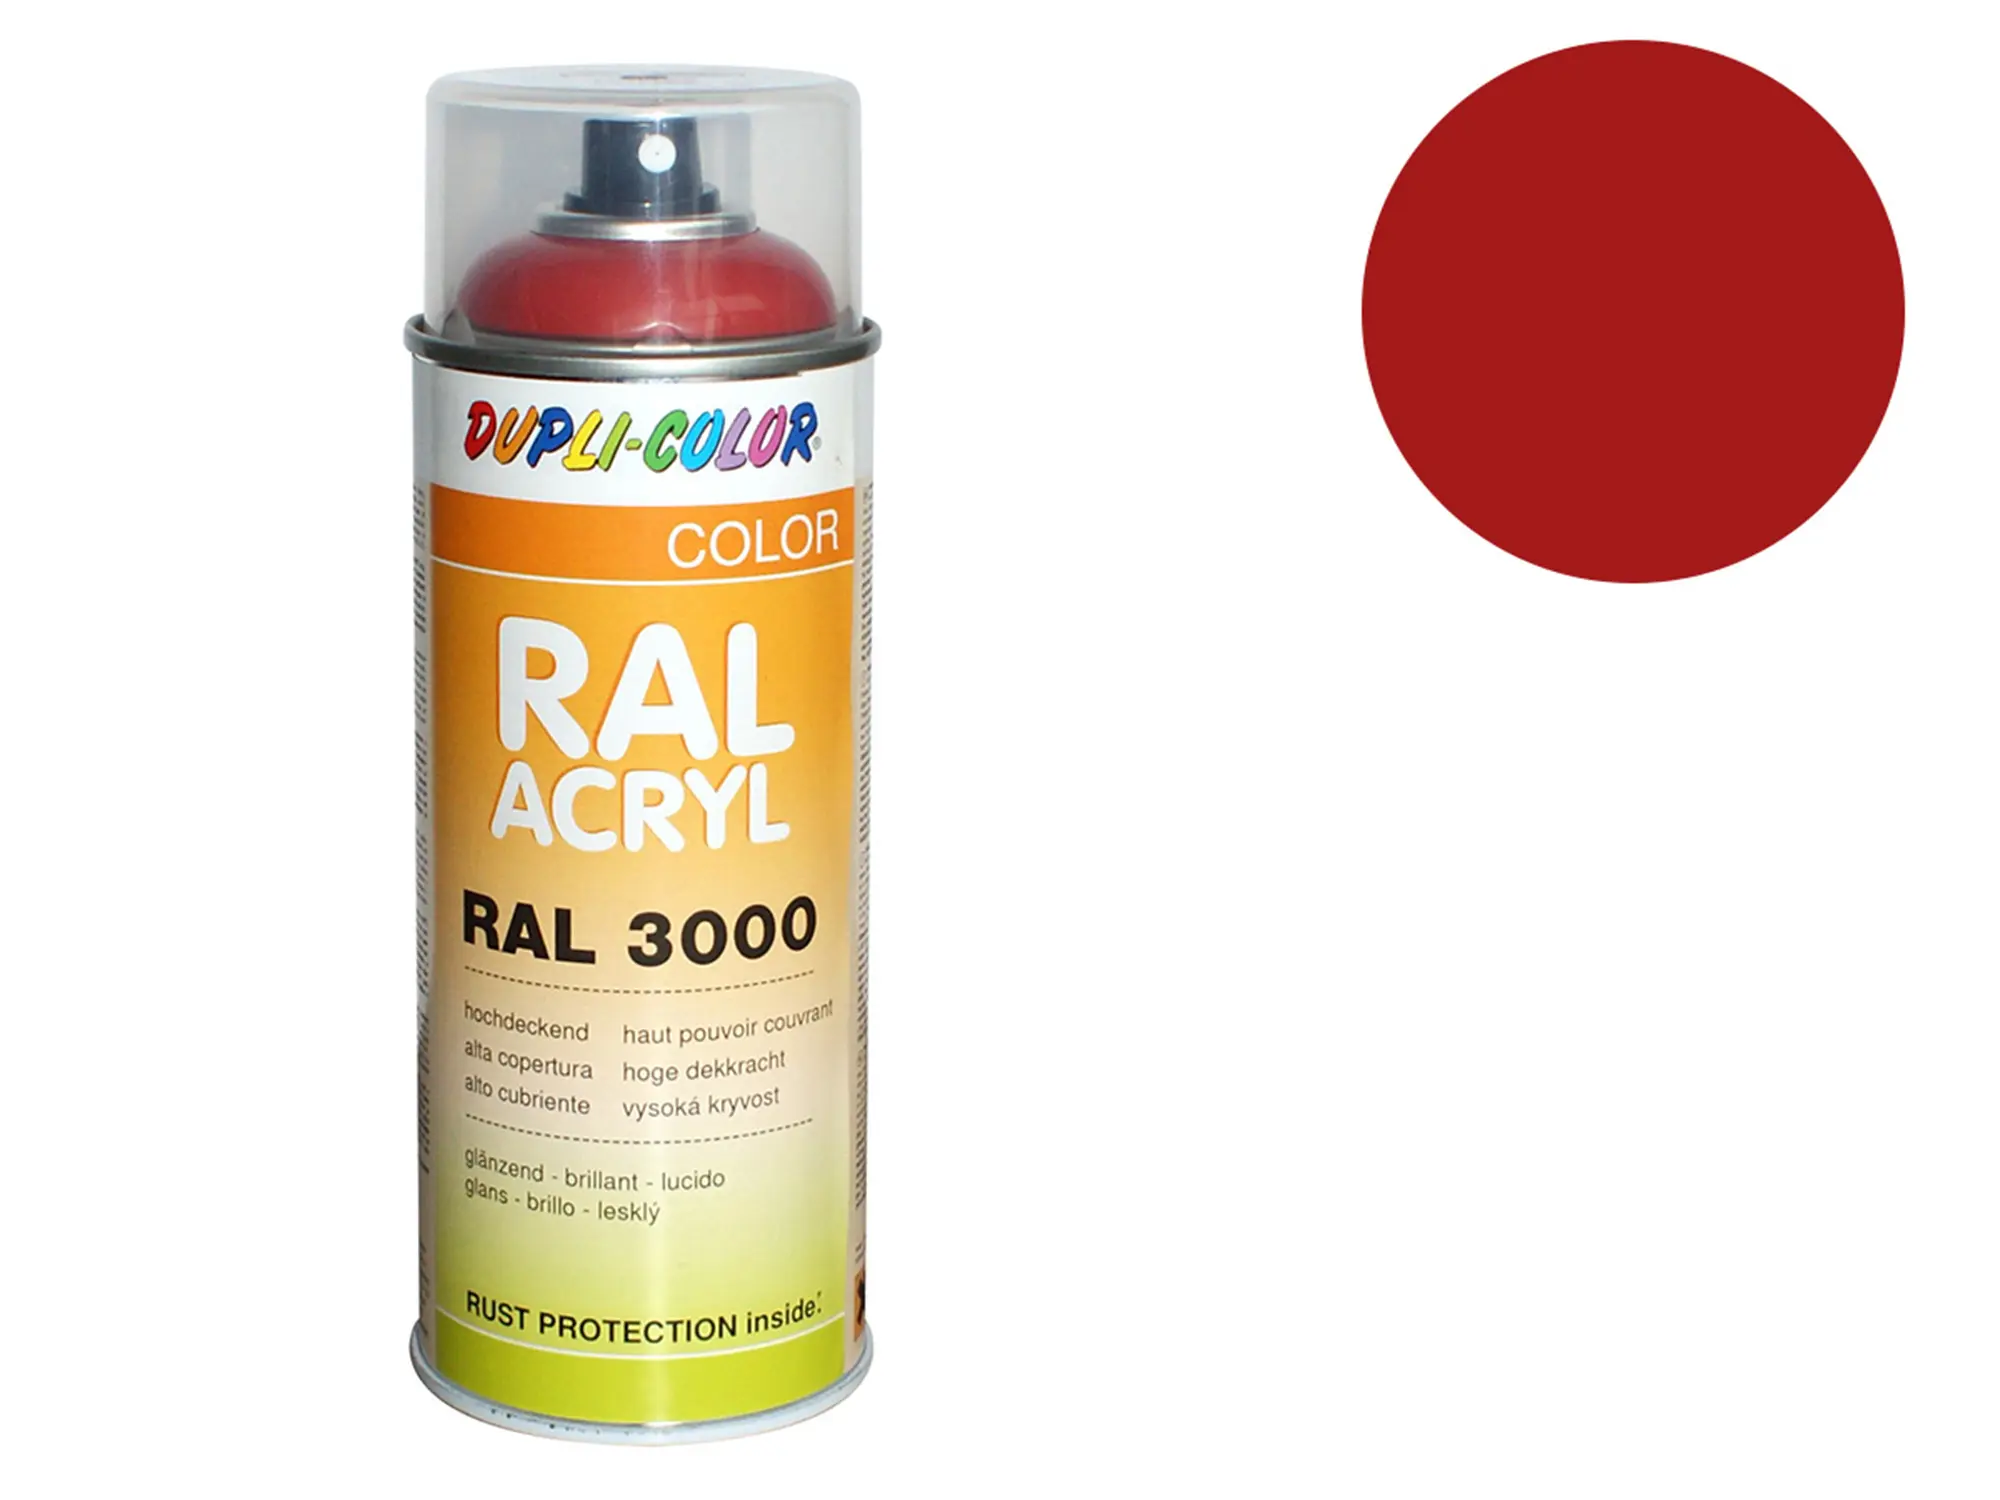 Dupli-Color Acryl-Spray RAL 3002 karminrot, glänzend - 400 ml, Art.-Nr.: 10064766 - Bild 1